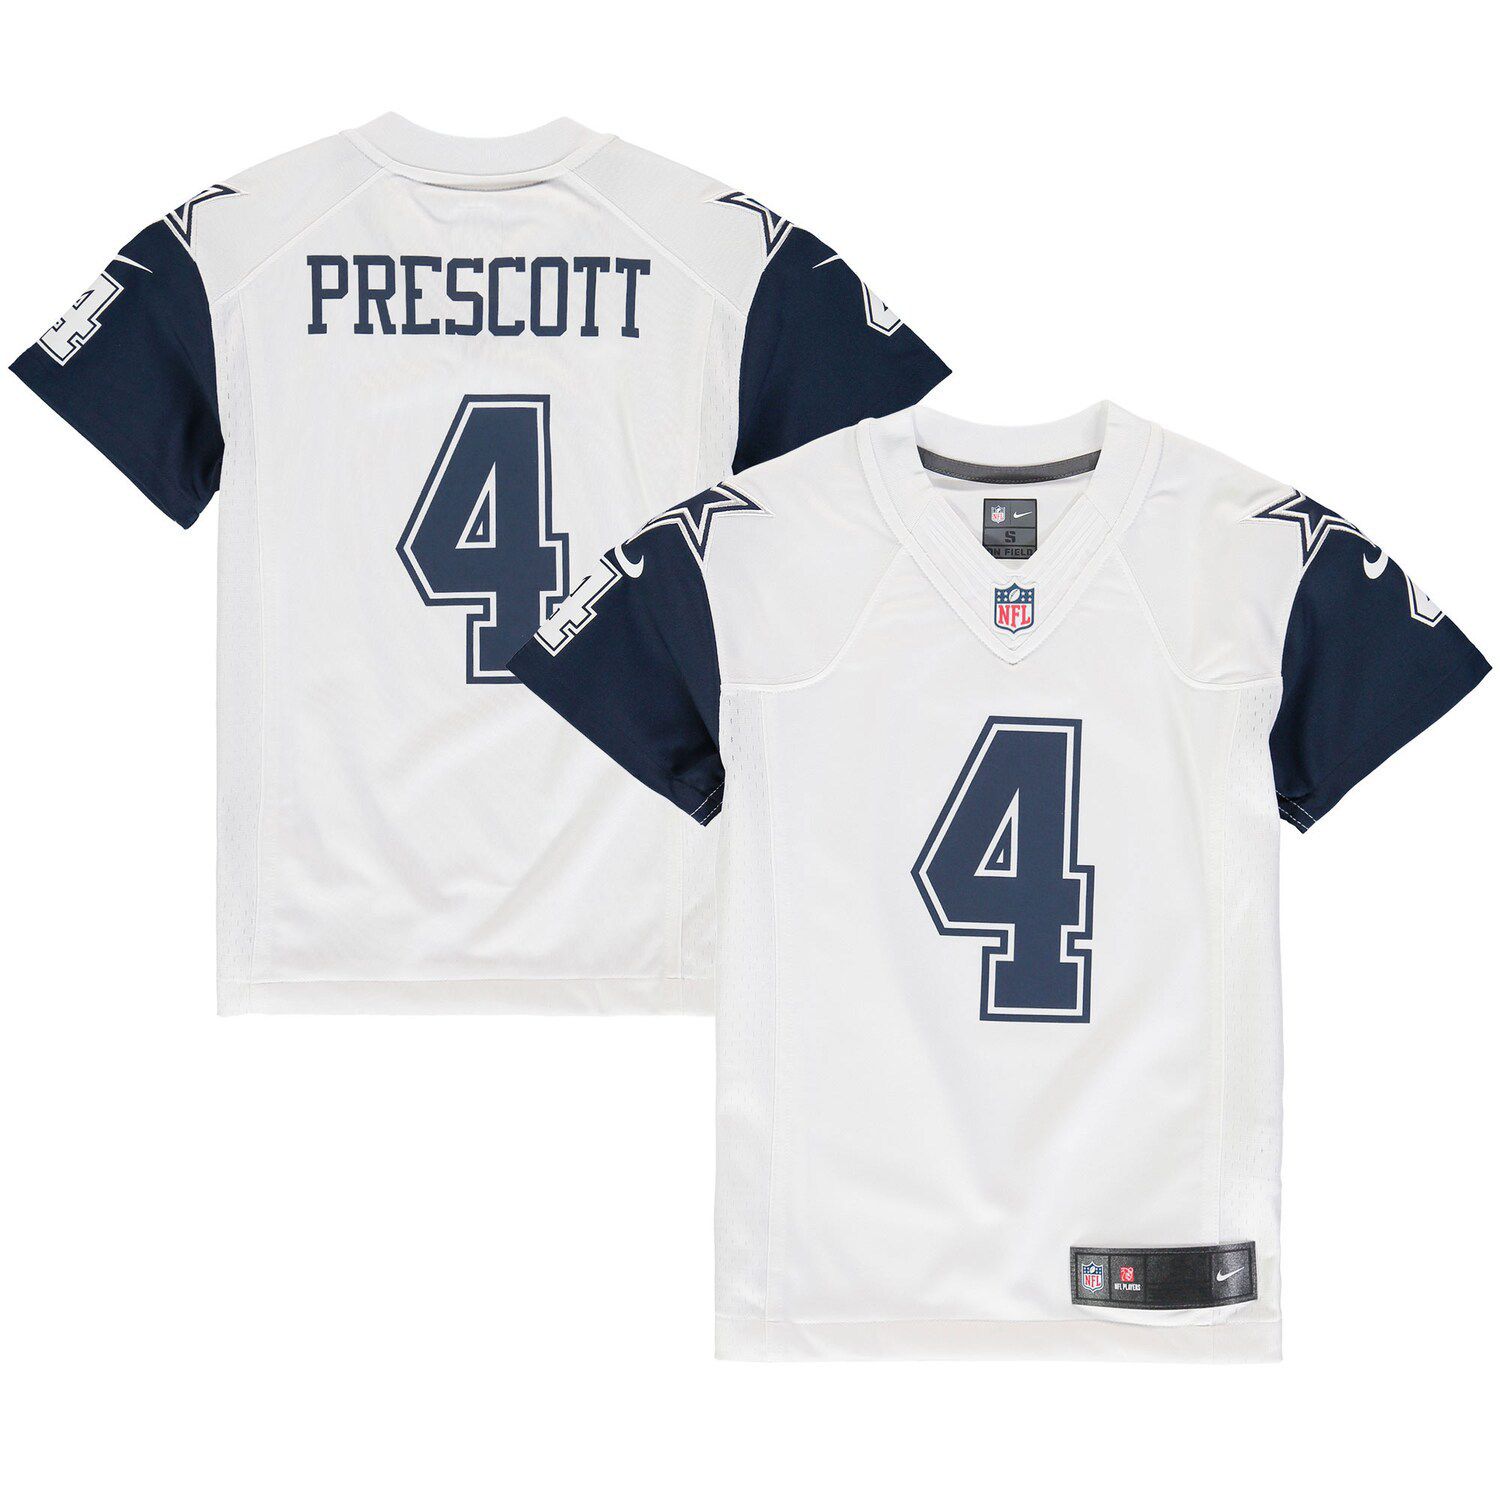 prescott color rush jersey